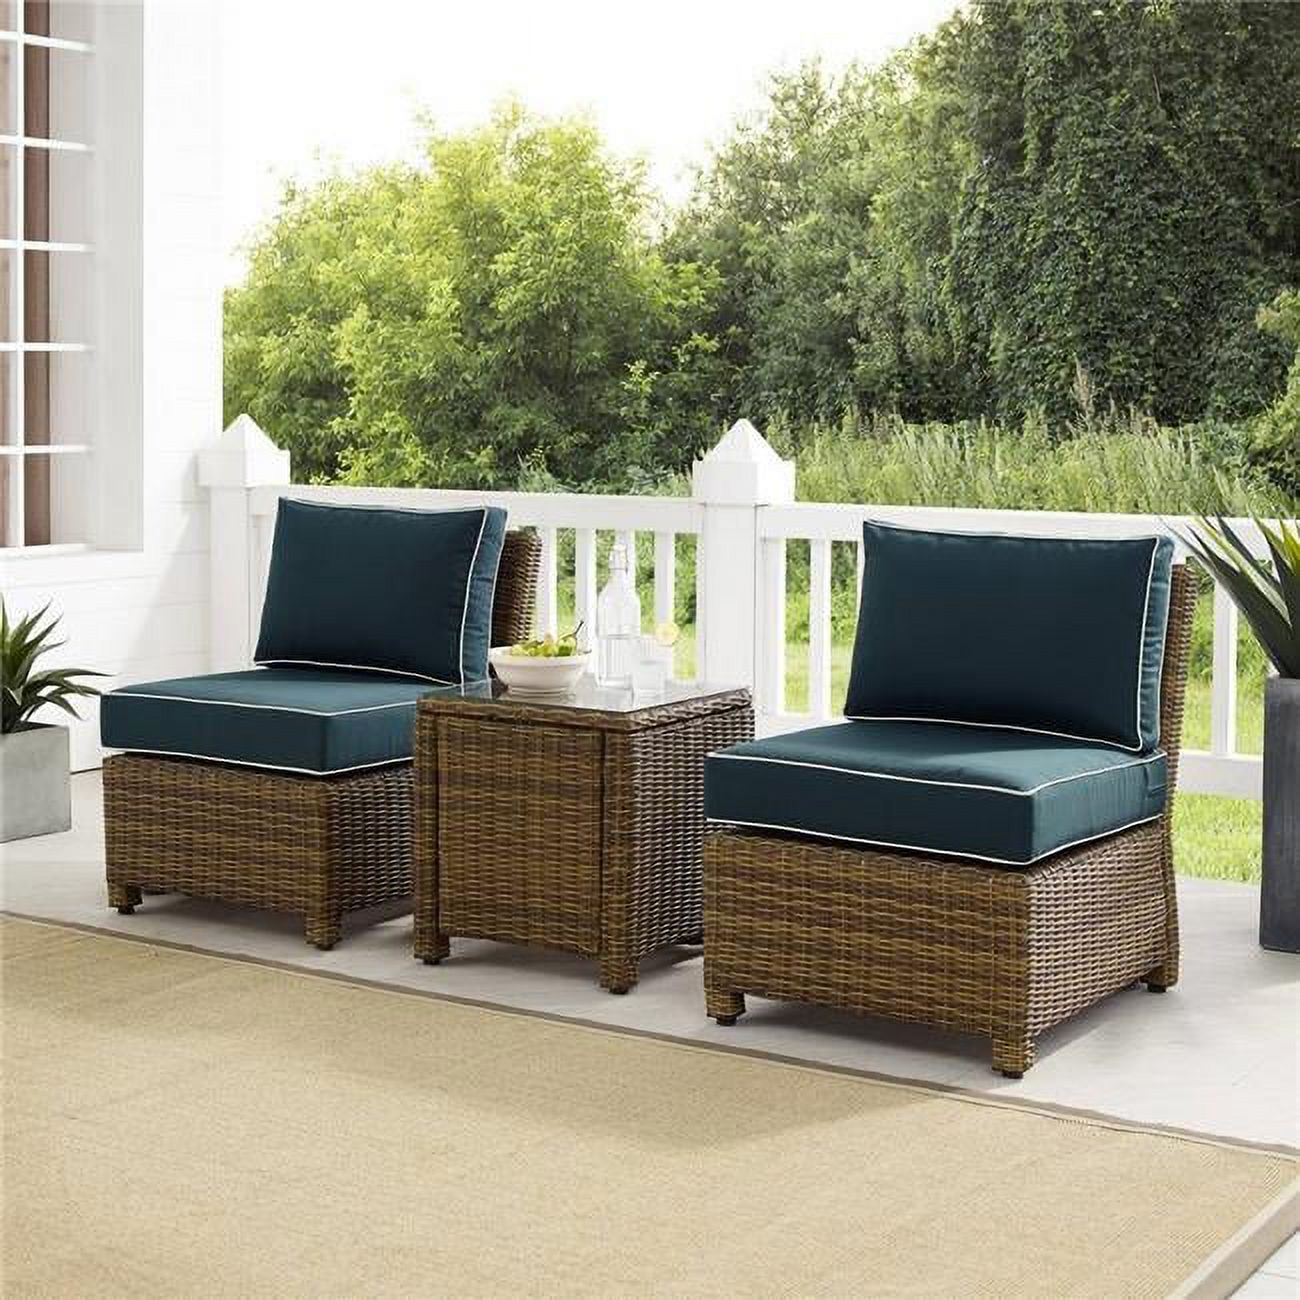 Crosley Furniture Bradenton 3PC Wicker & Fabric Outdoor Chair Set in Navy/Brown - image 1 of 6